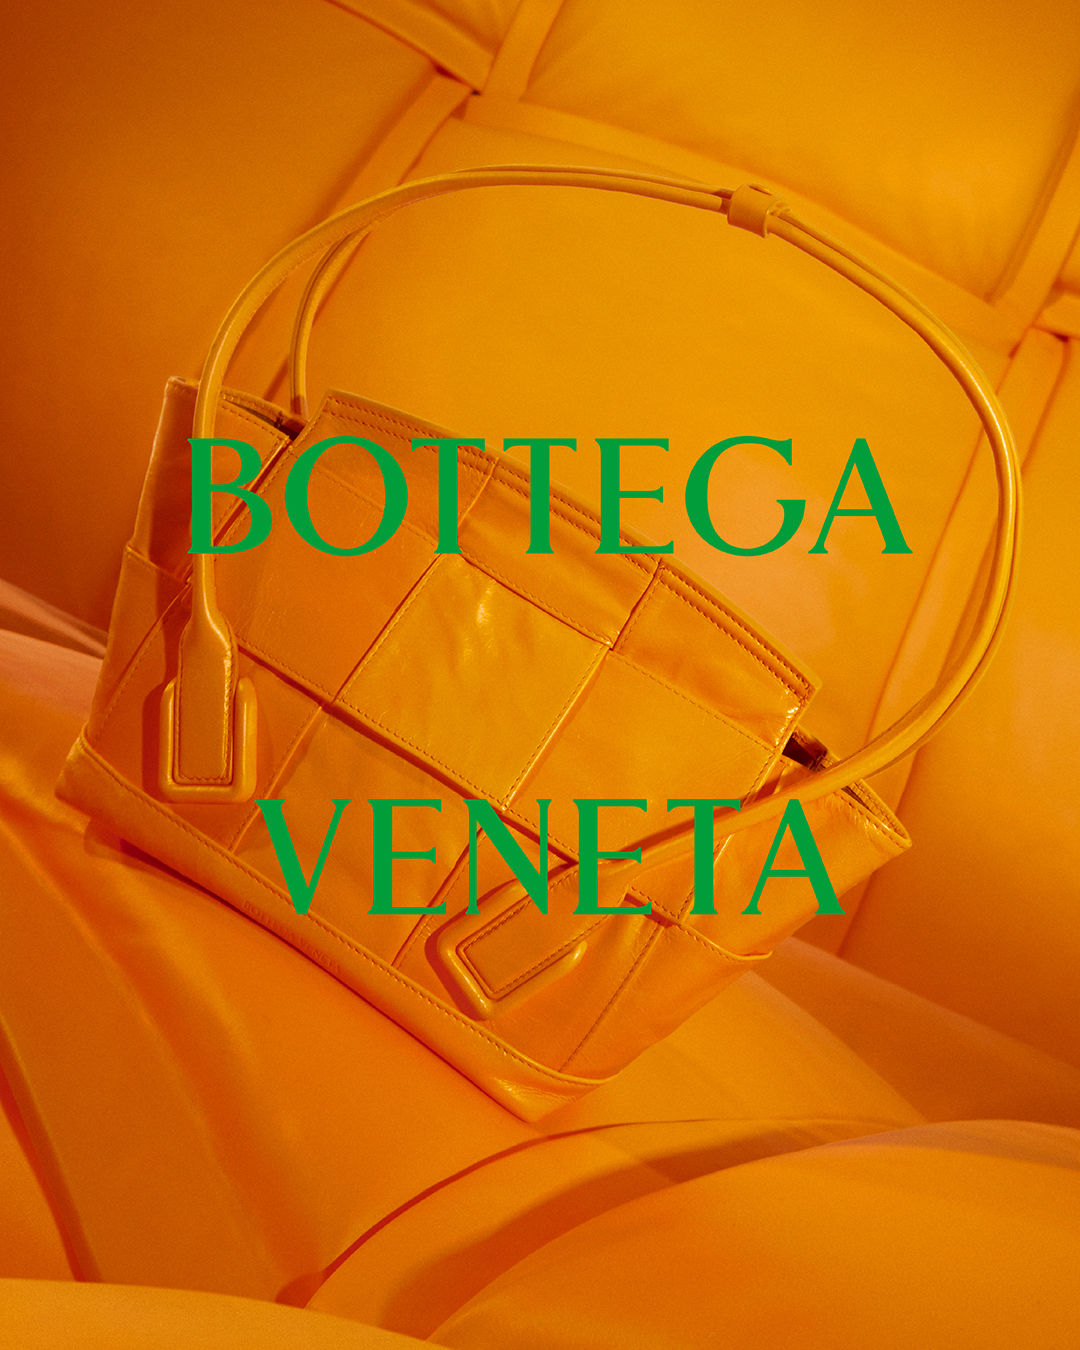 Bottega Veneta's China Ambition May Come Too Late